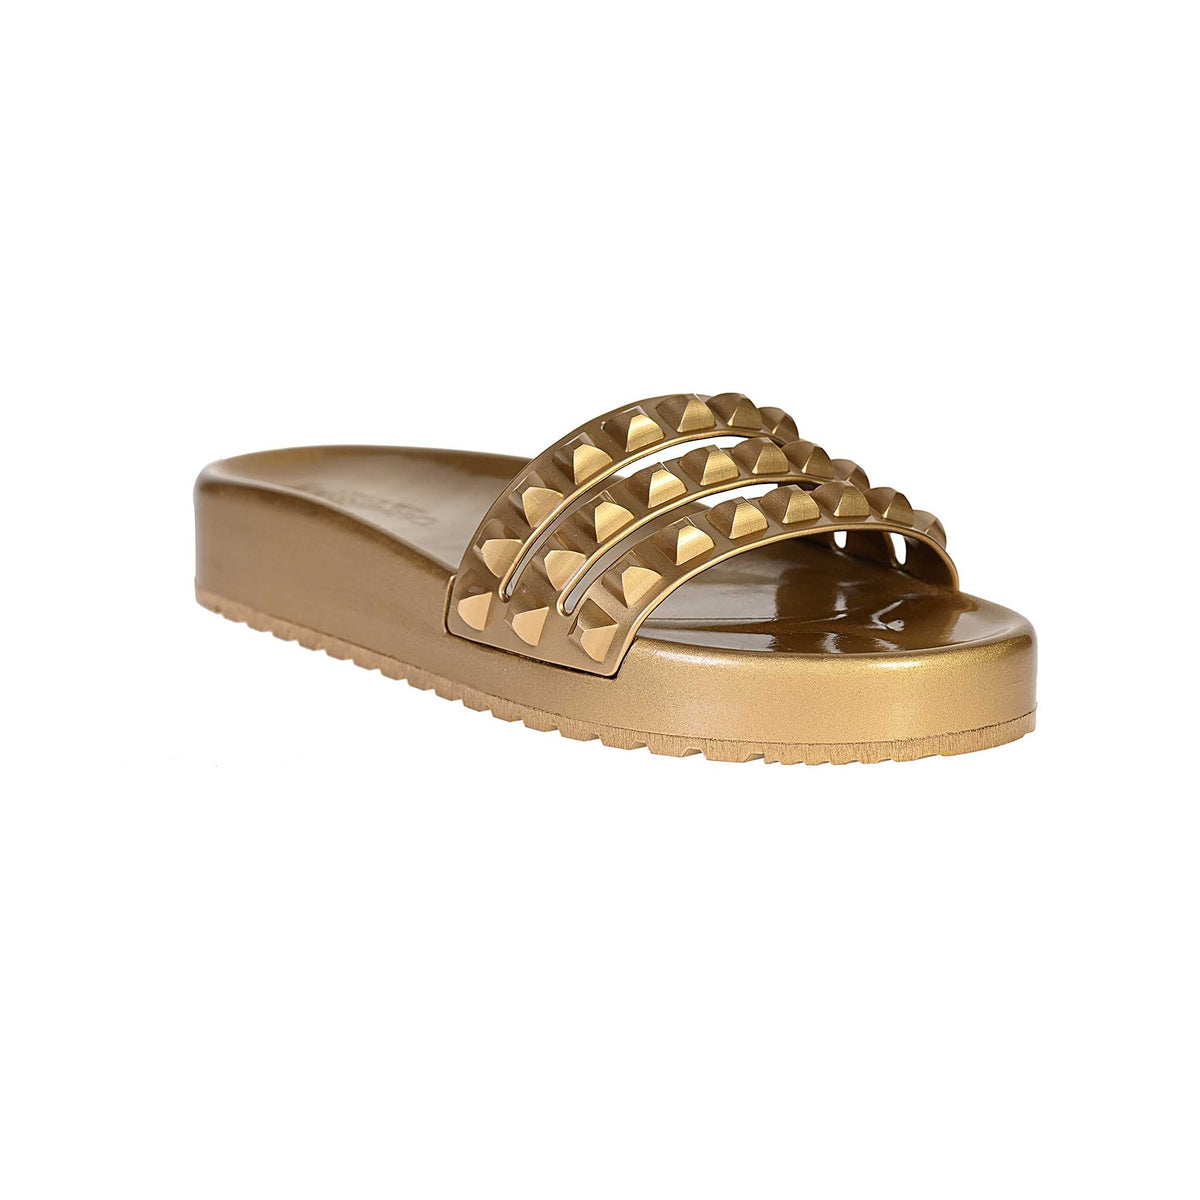 Carmen sol platform flip flop summer sandals, Shine bright, walk tall in platform slides.